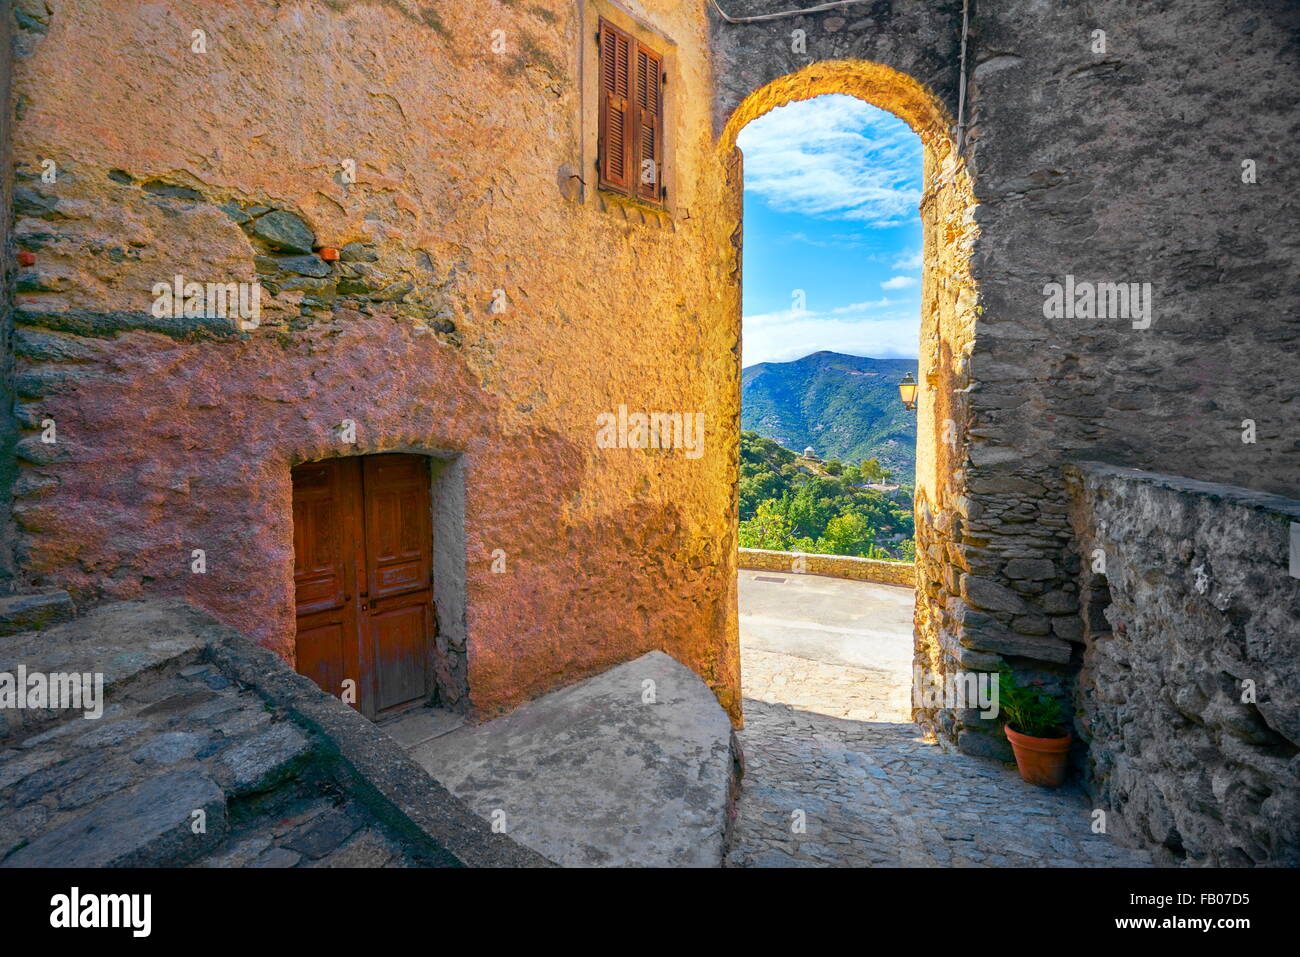 Lama, small mountain village, Balagne, West Coast, Corsica Island, France Stock Photo